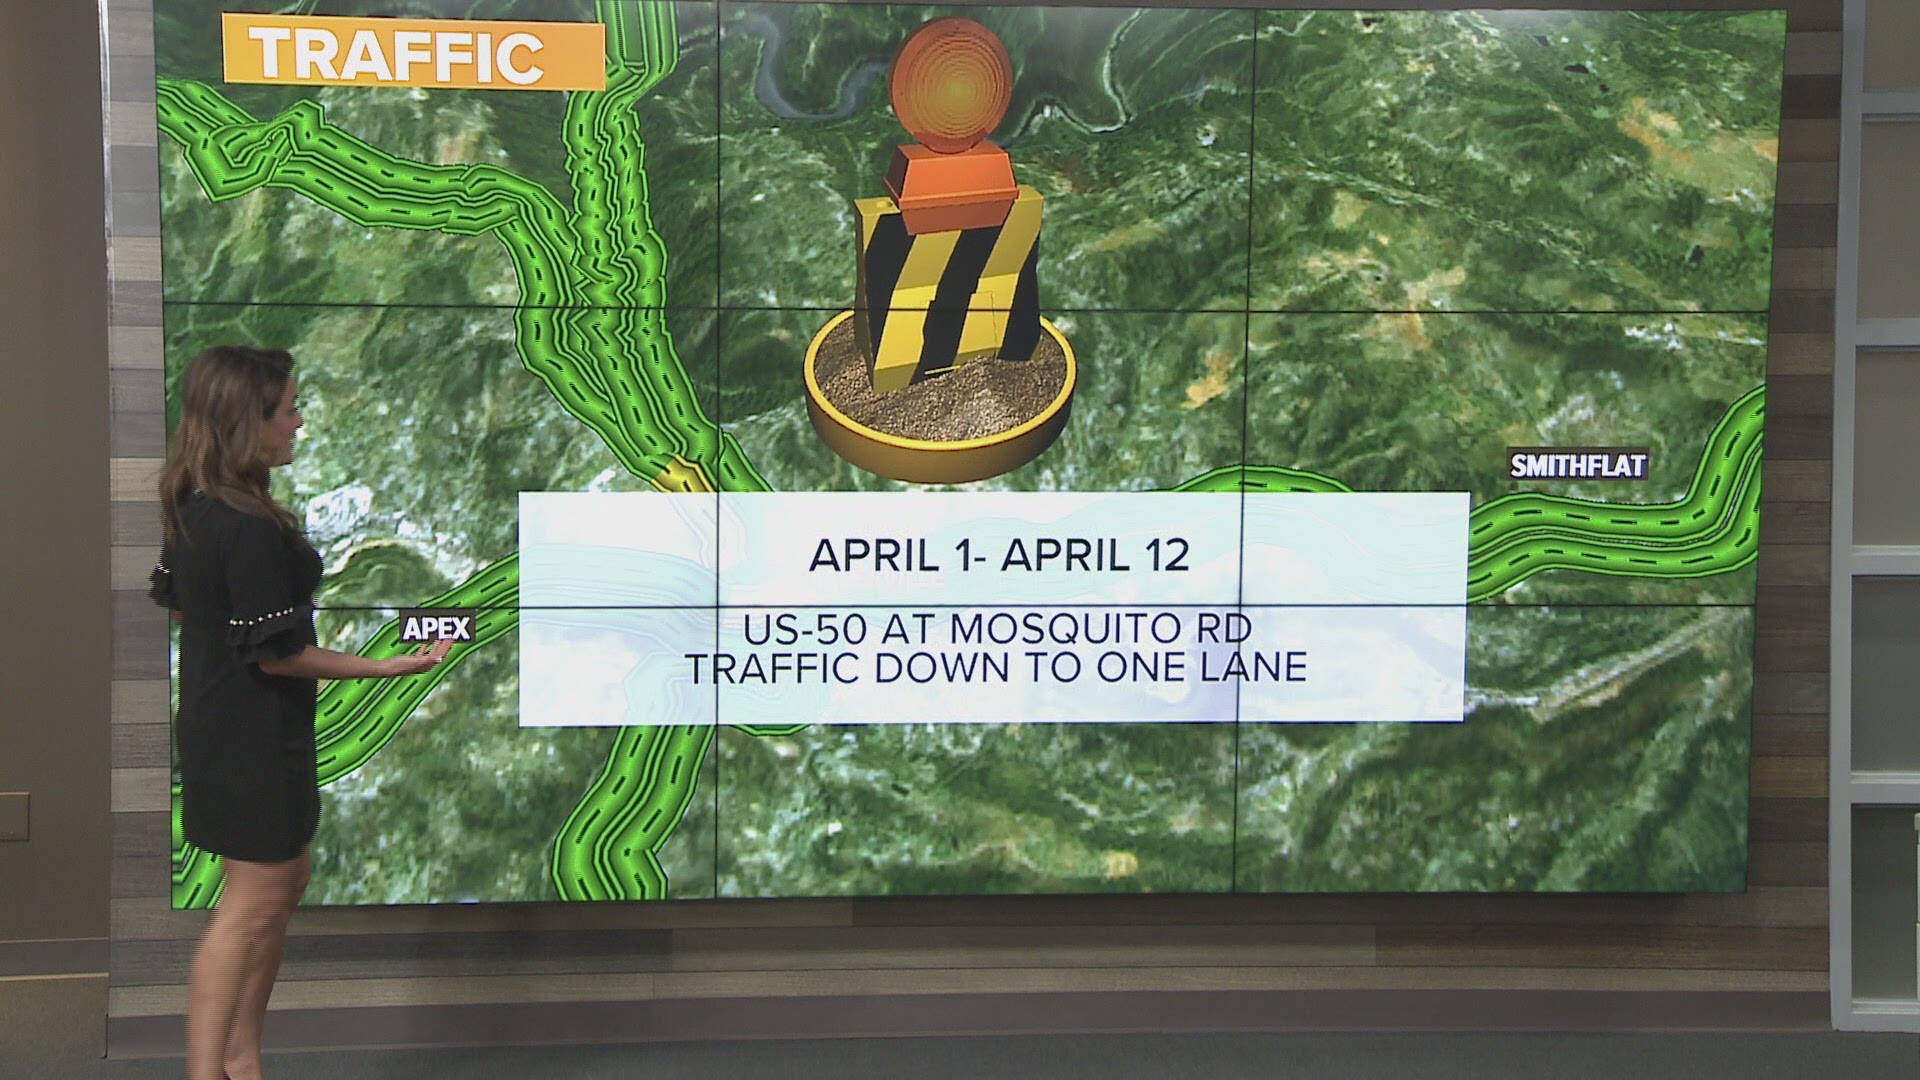 Expect major delays beginning Monday, April 1, through Friday, April 12, along US-50.